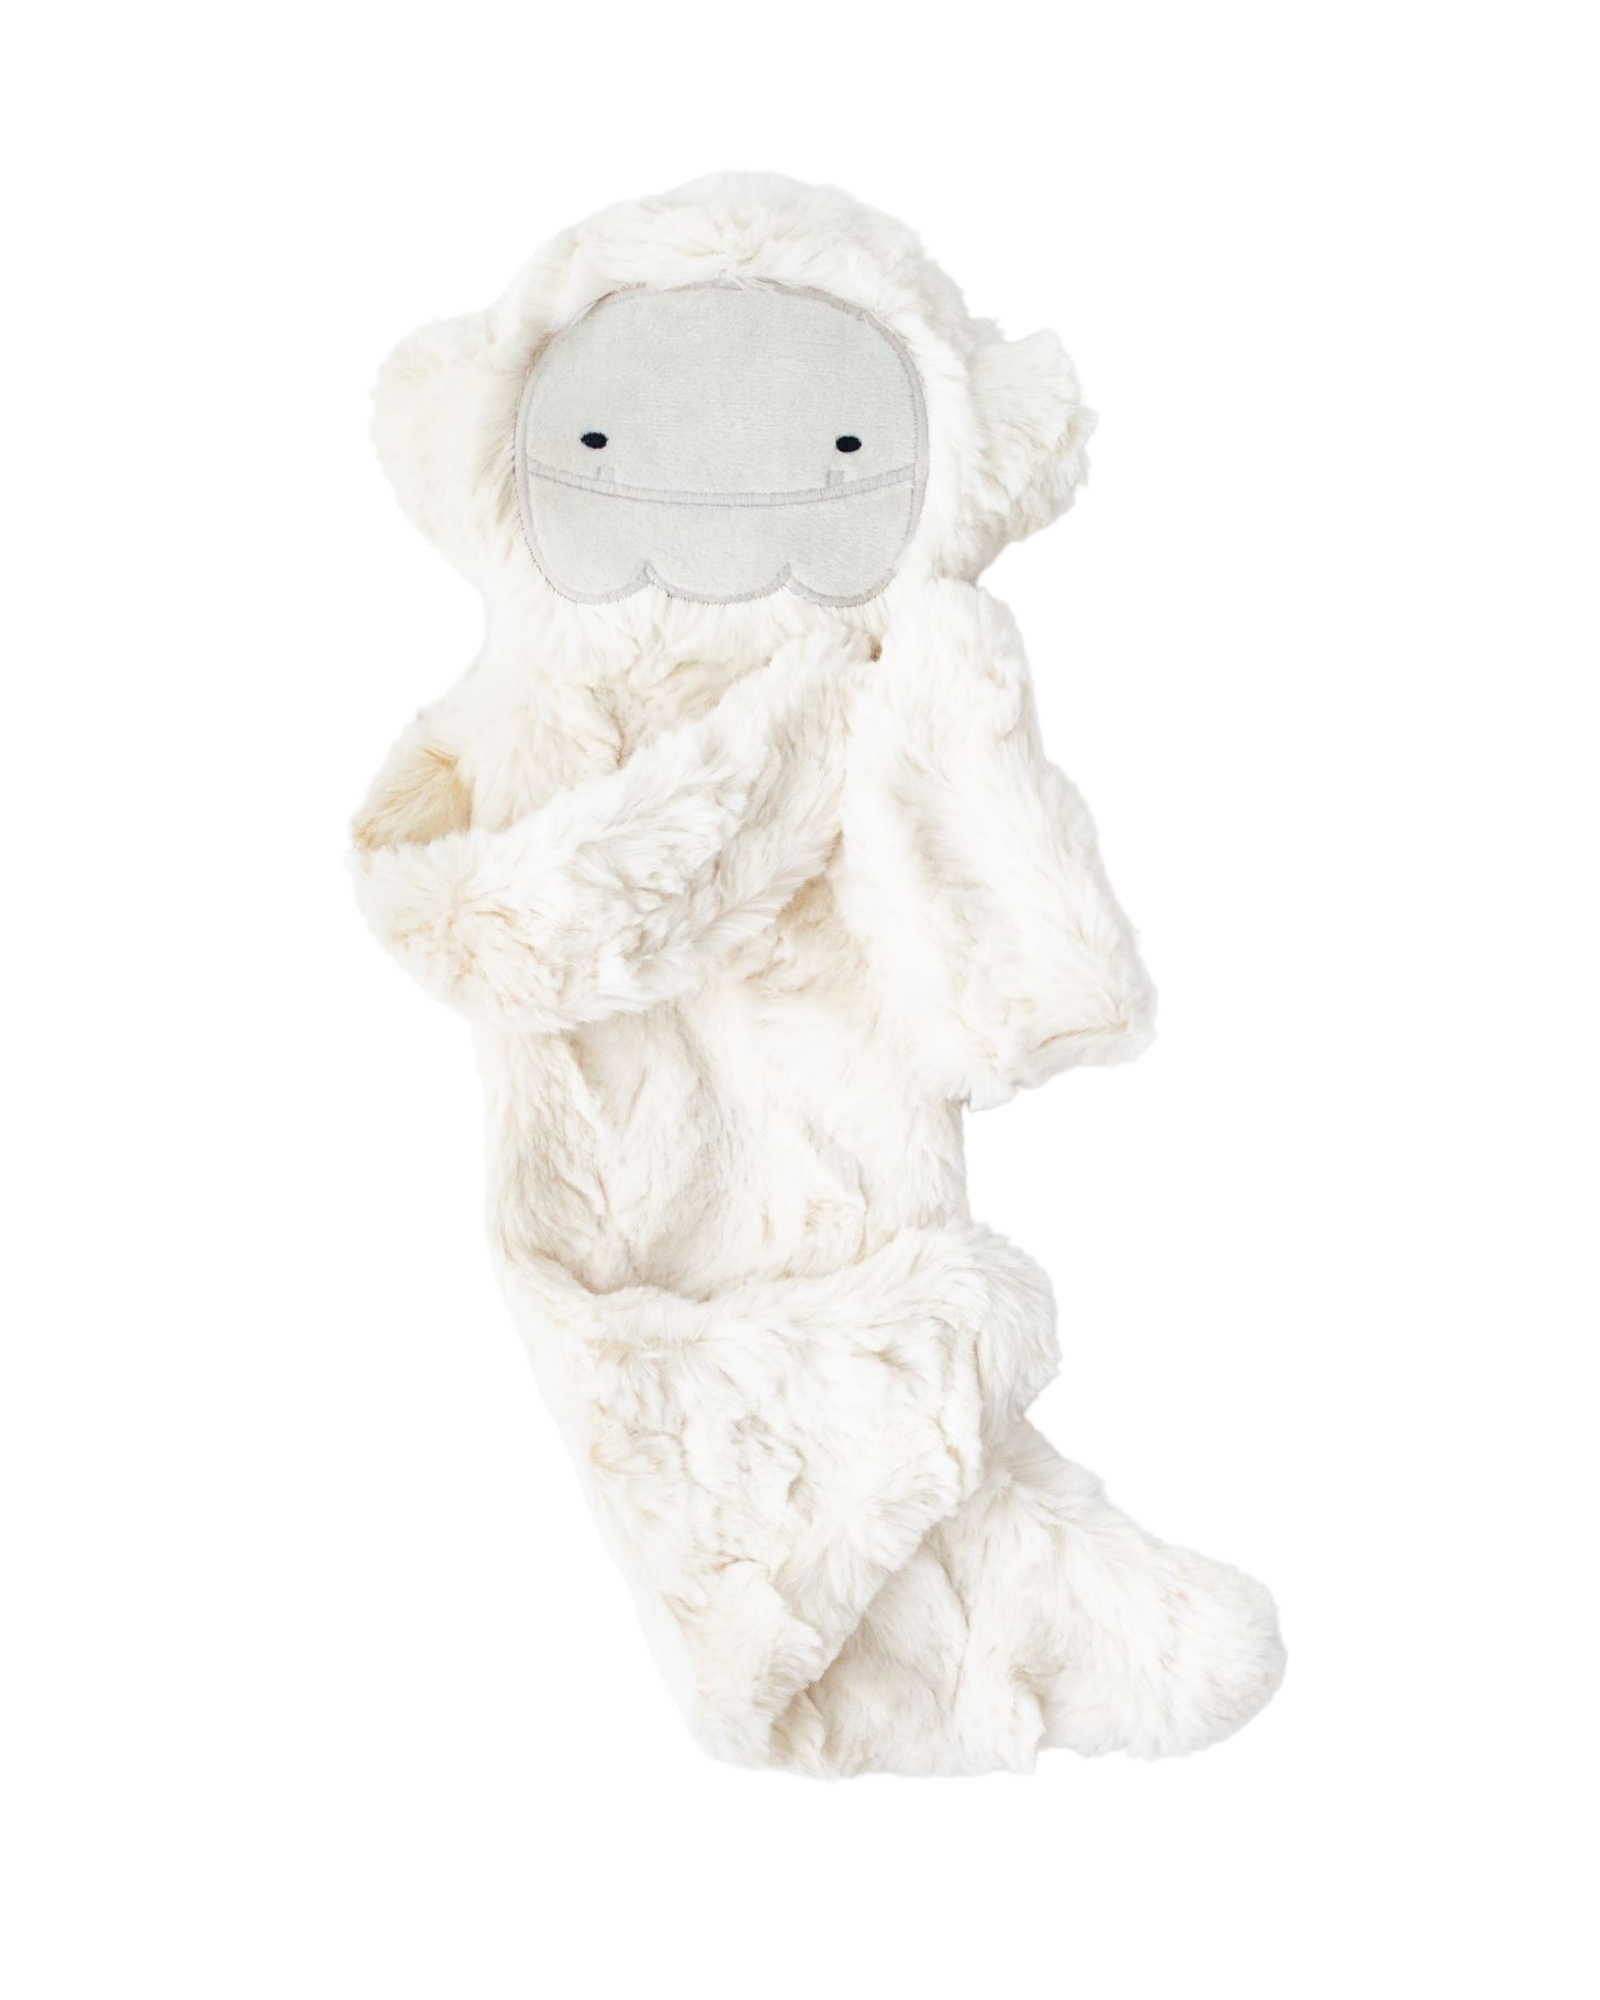 Fuzzy white alpine yeti slumberkin